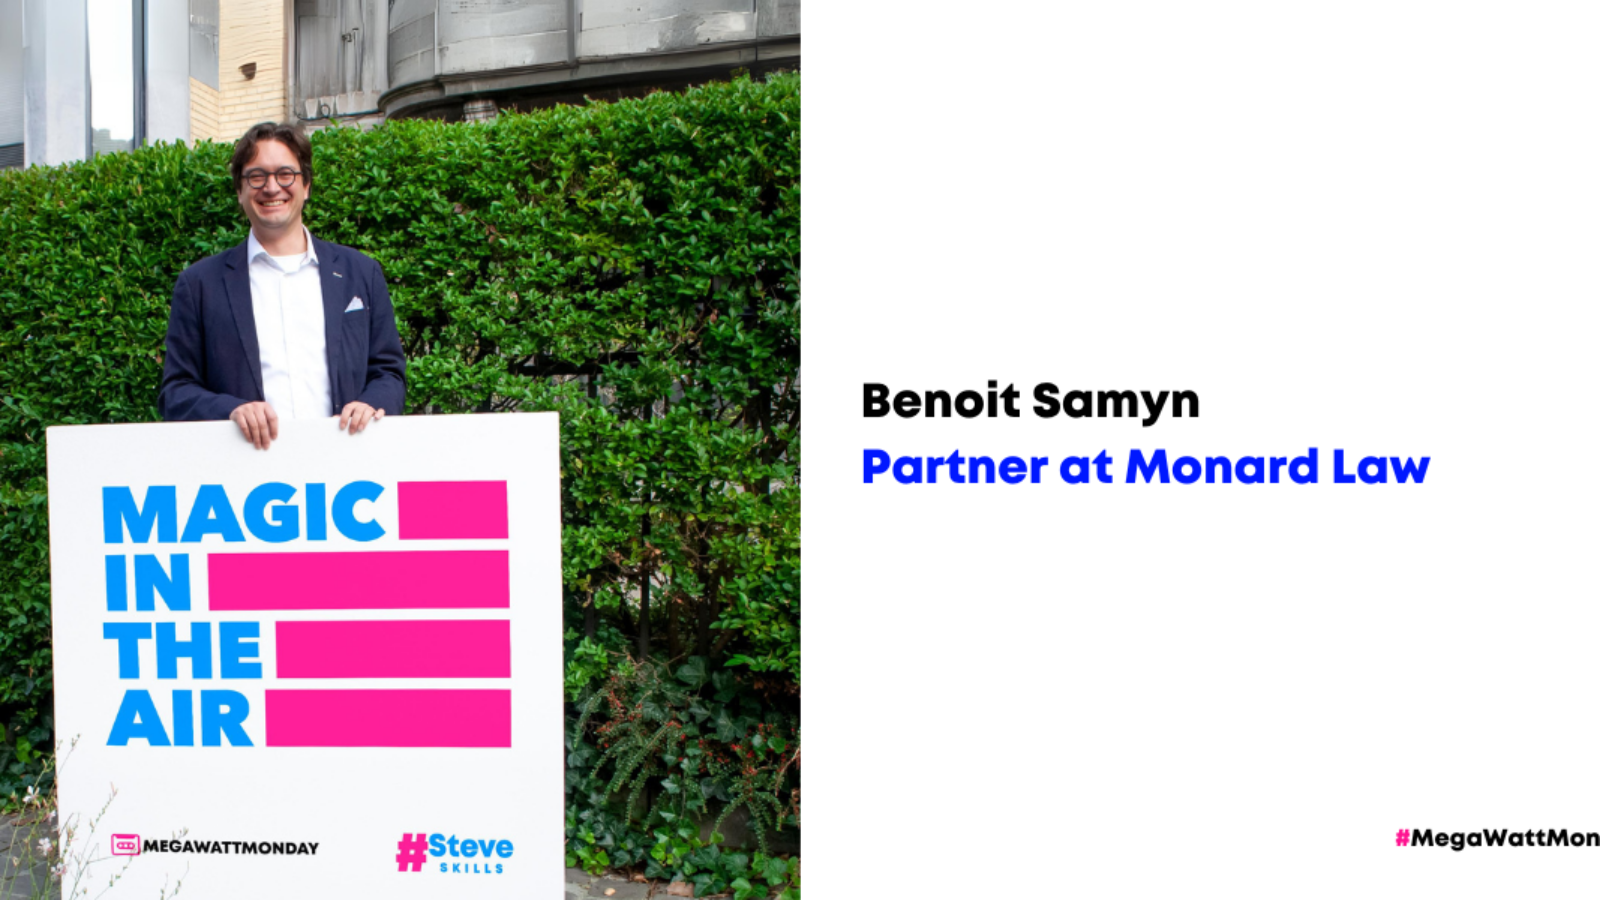 #MegaWattMonday with Benoit Samyn, Partner at Monard Law